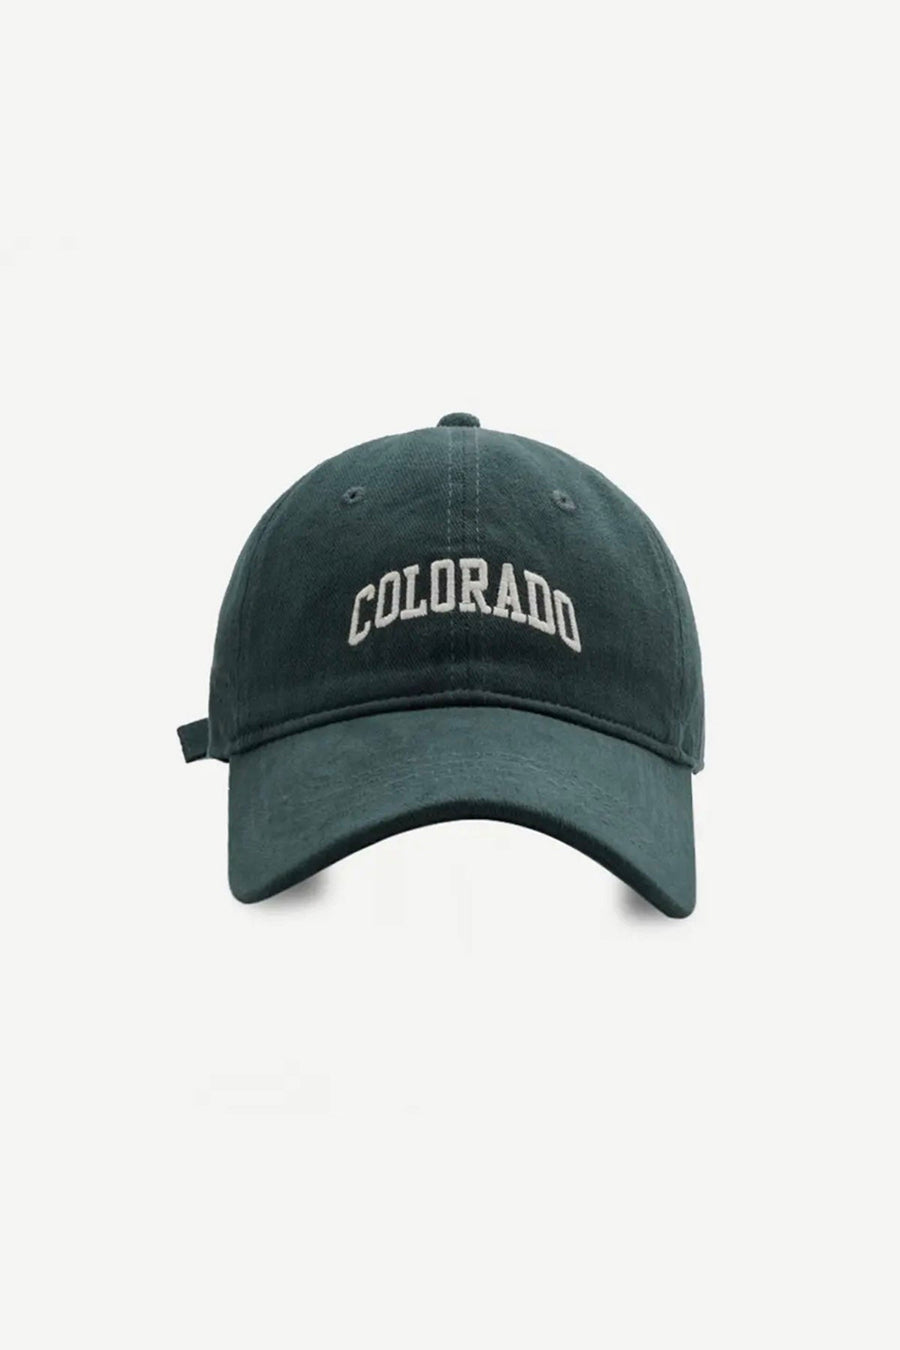 Colorado Cap in Forest